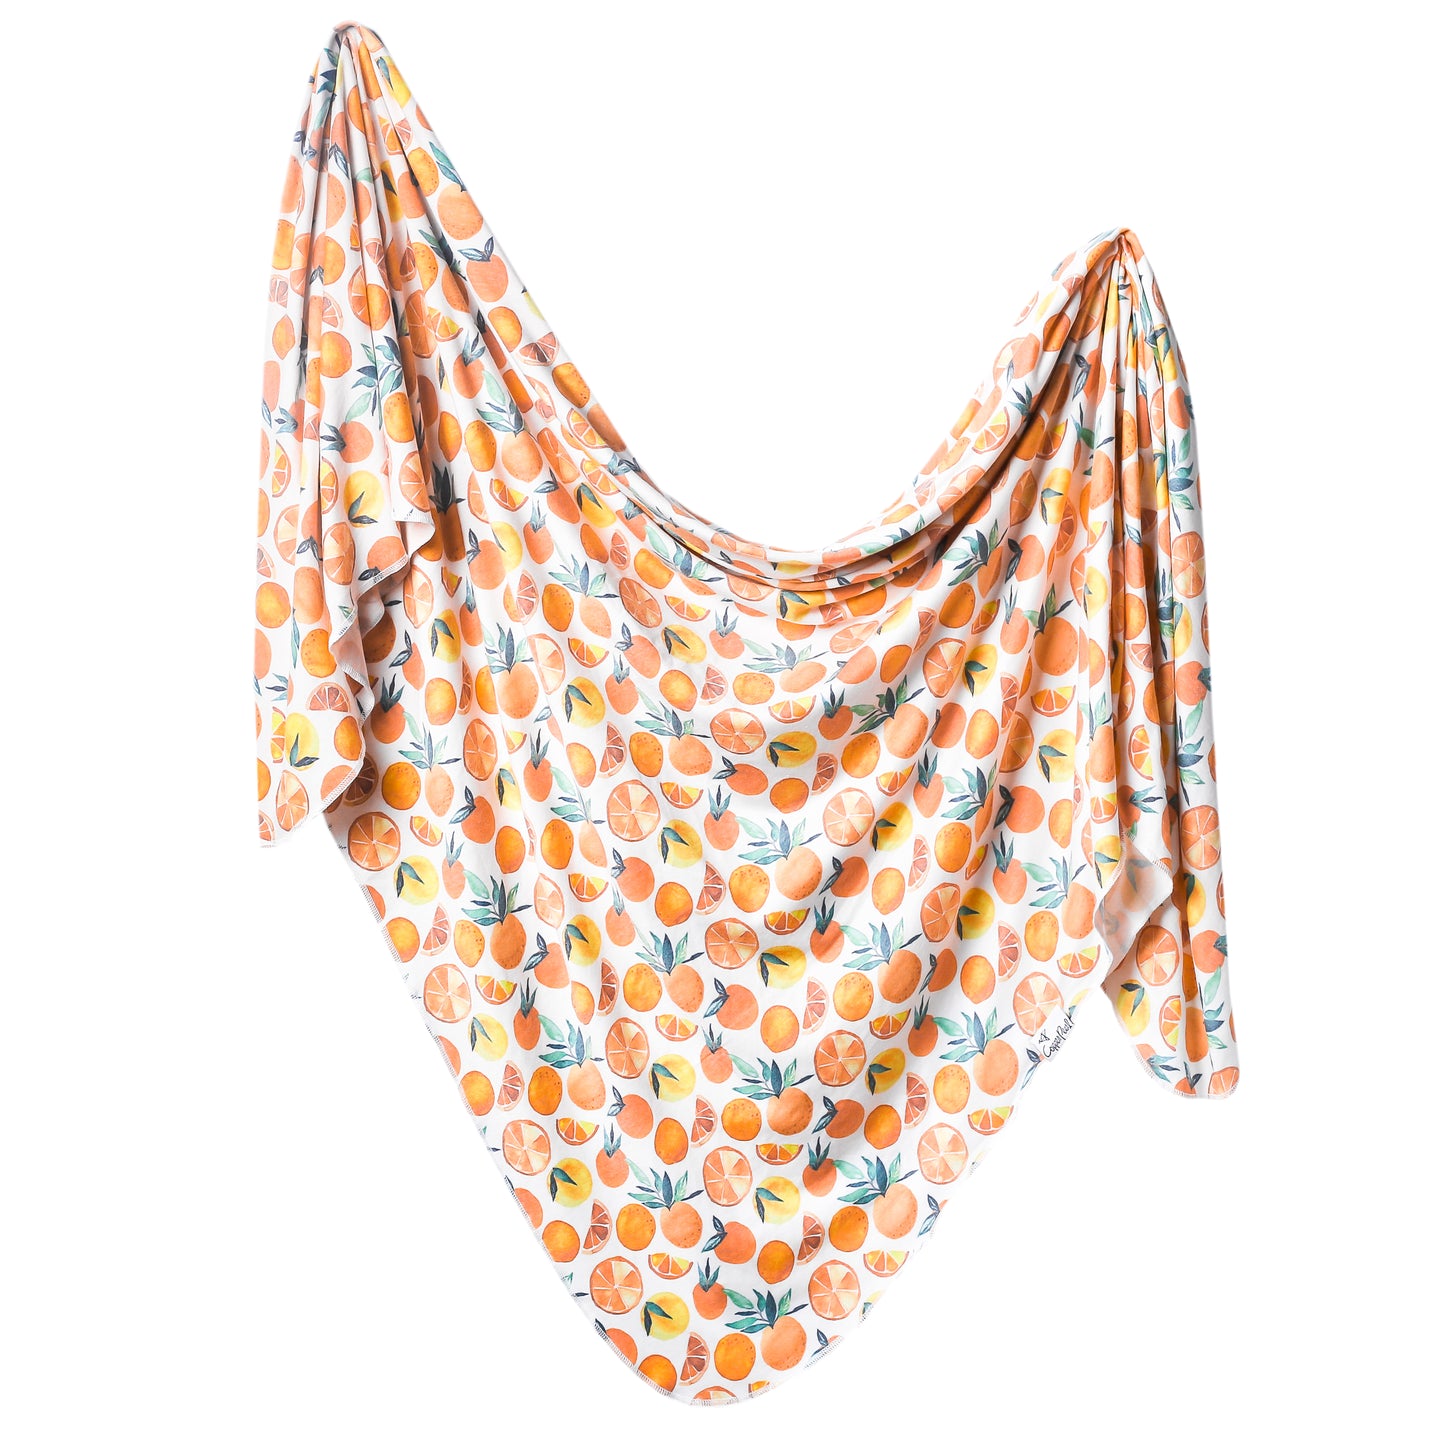 Copper Pearl Knit Swaddle Blanket - Citrus